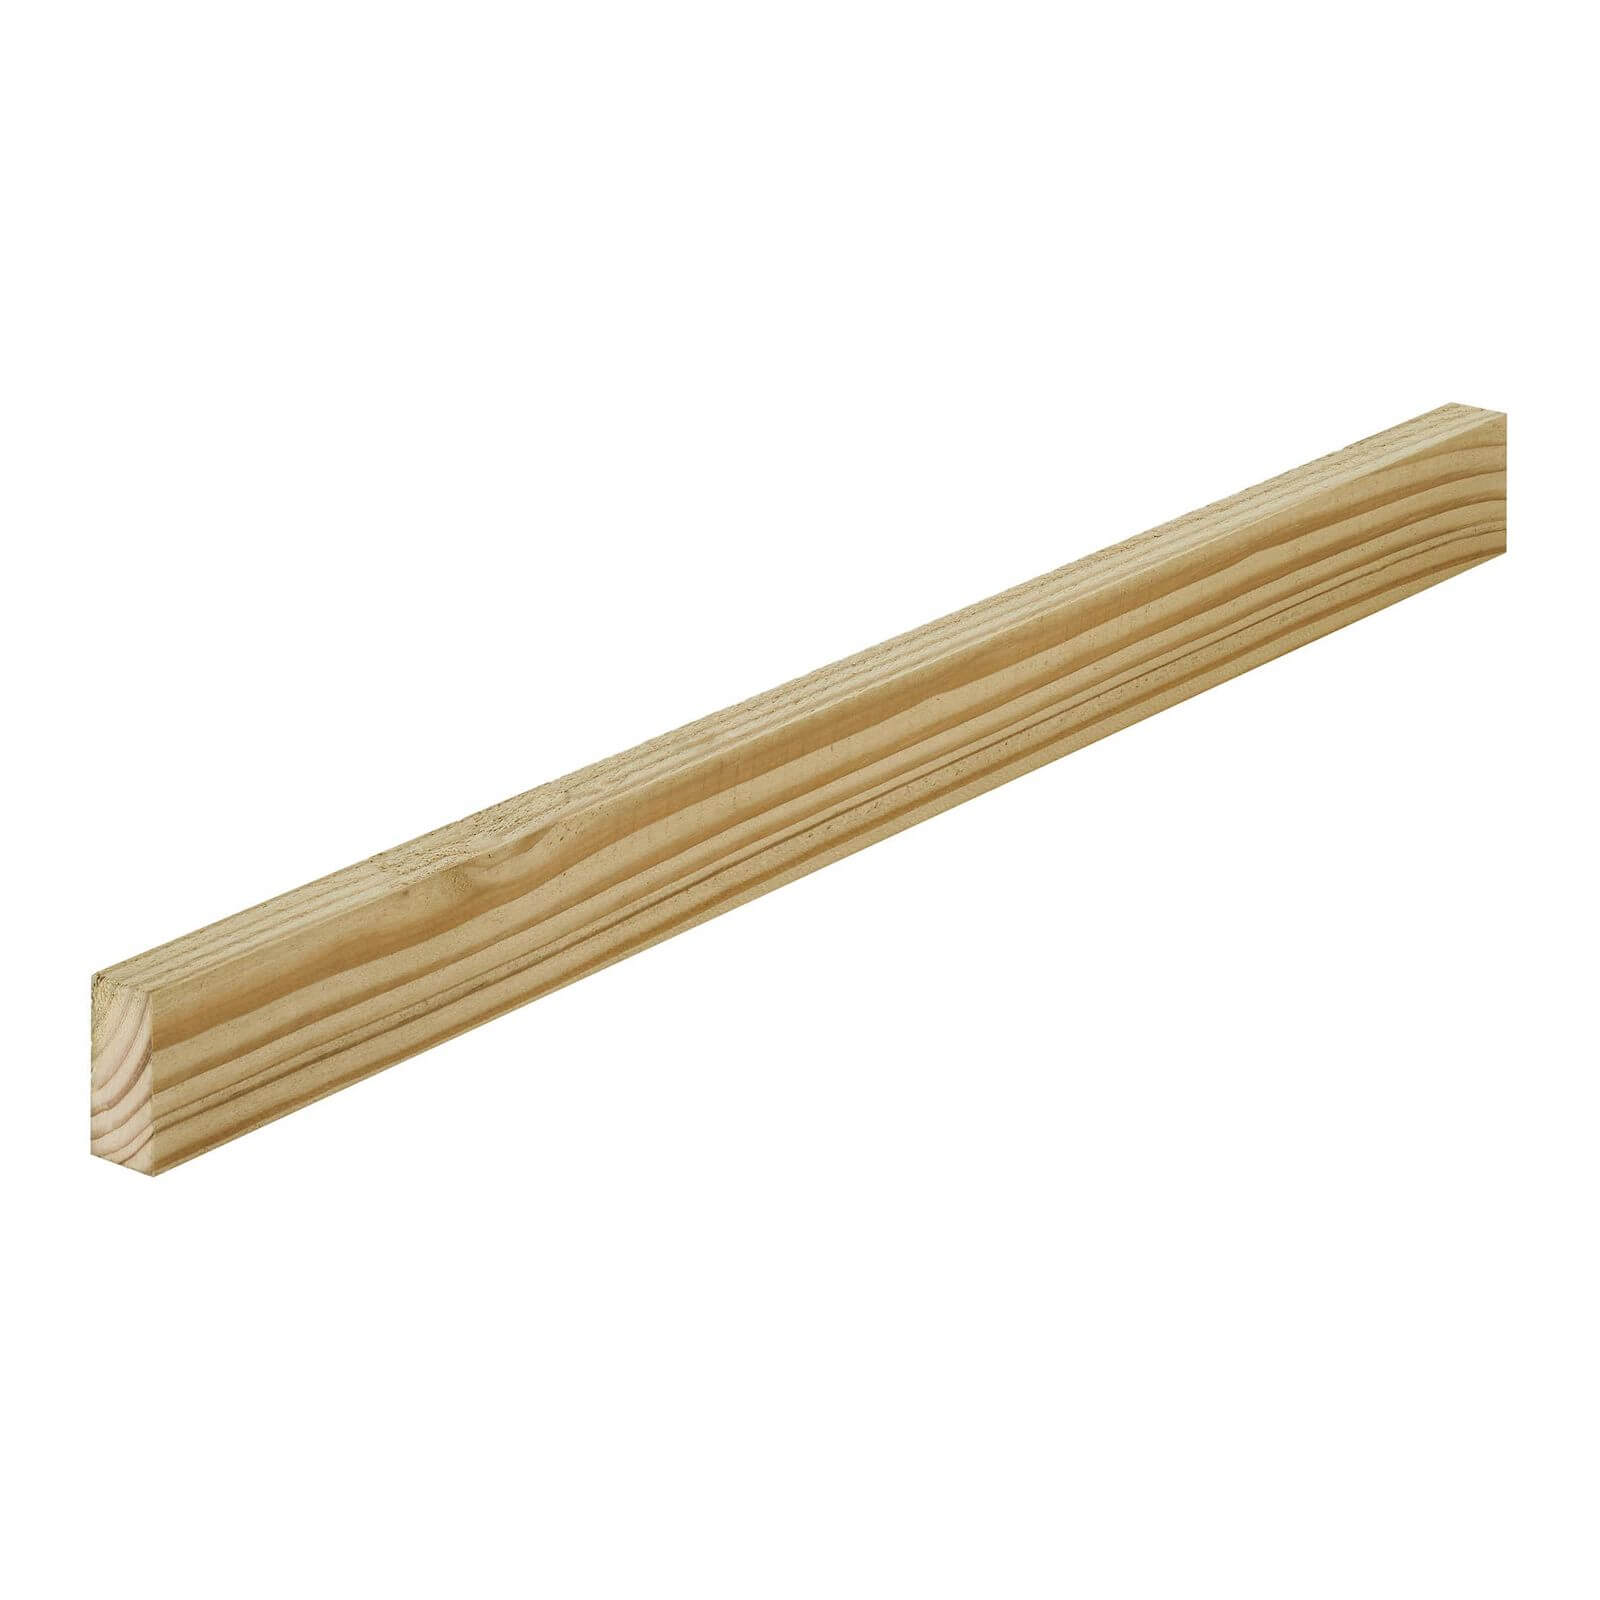 Photo of Metsa Sawn Treated Stick Softwood Timber 1.8m -19mm X 38mm X 1800mm-